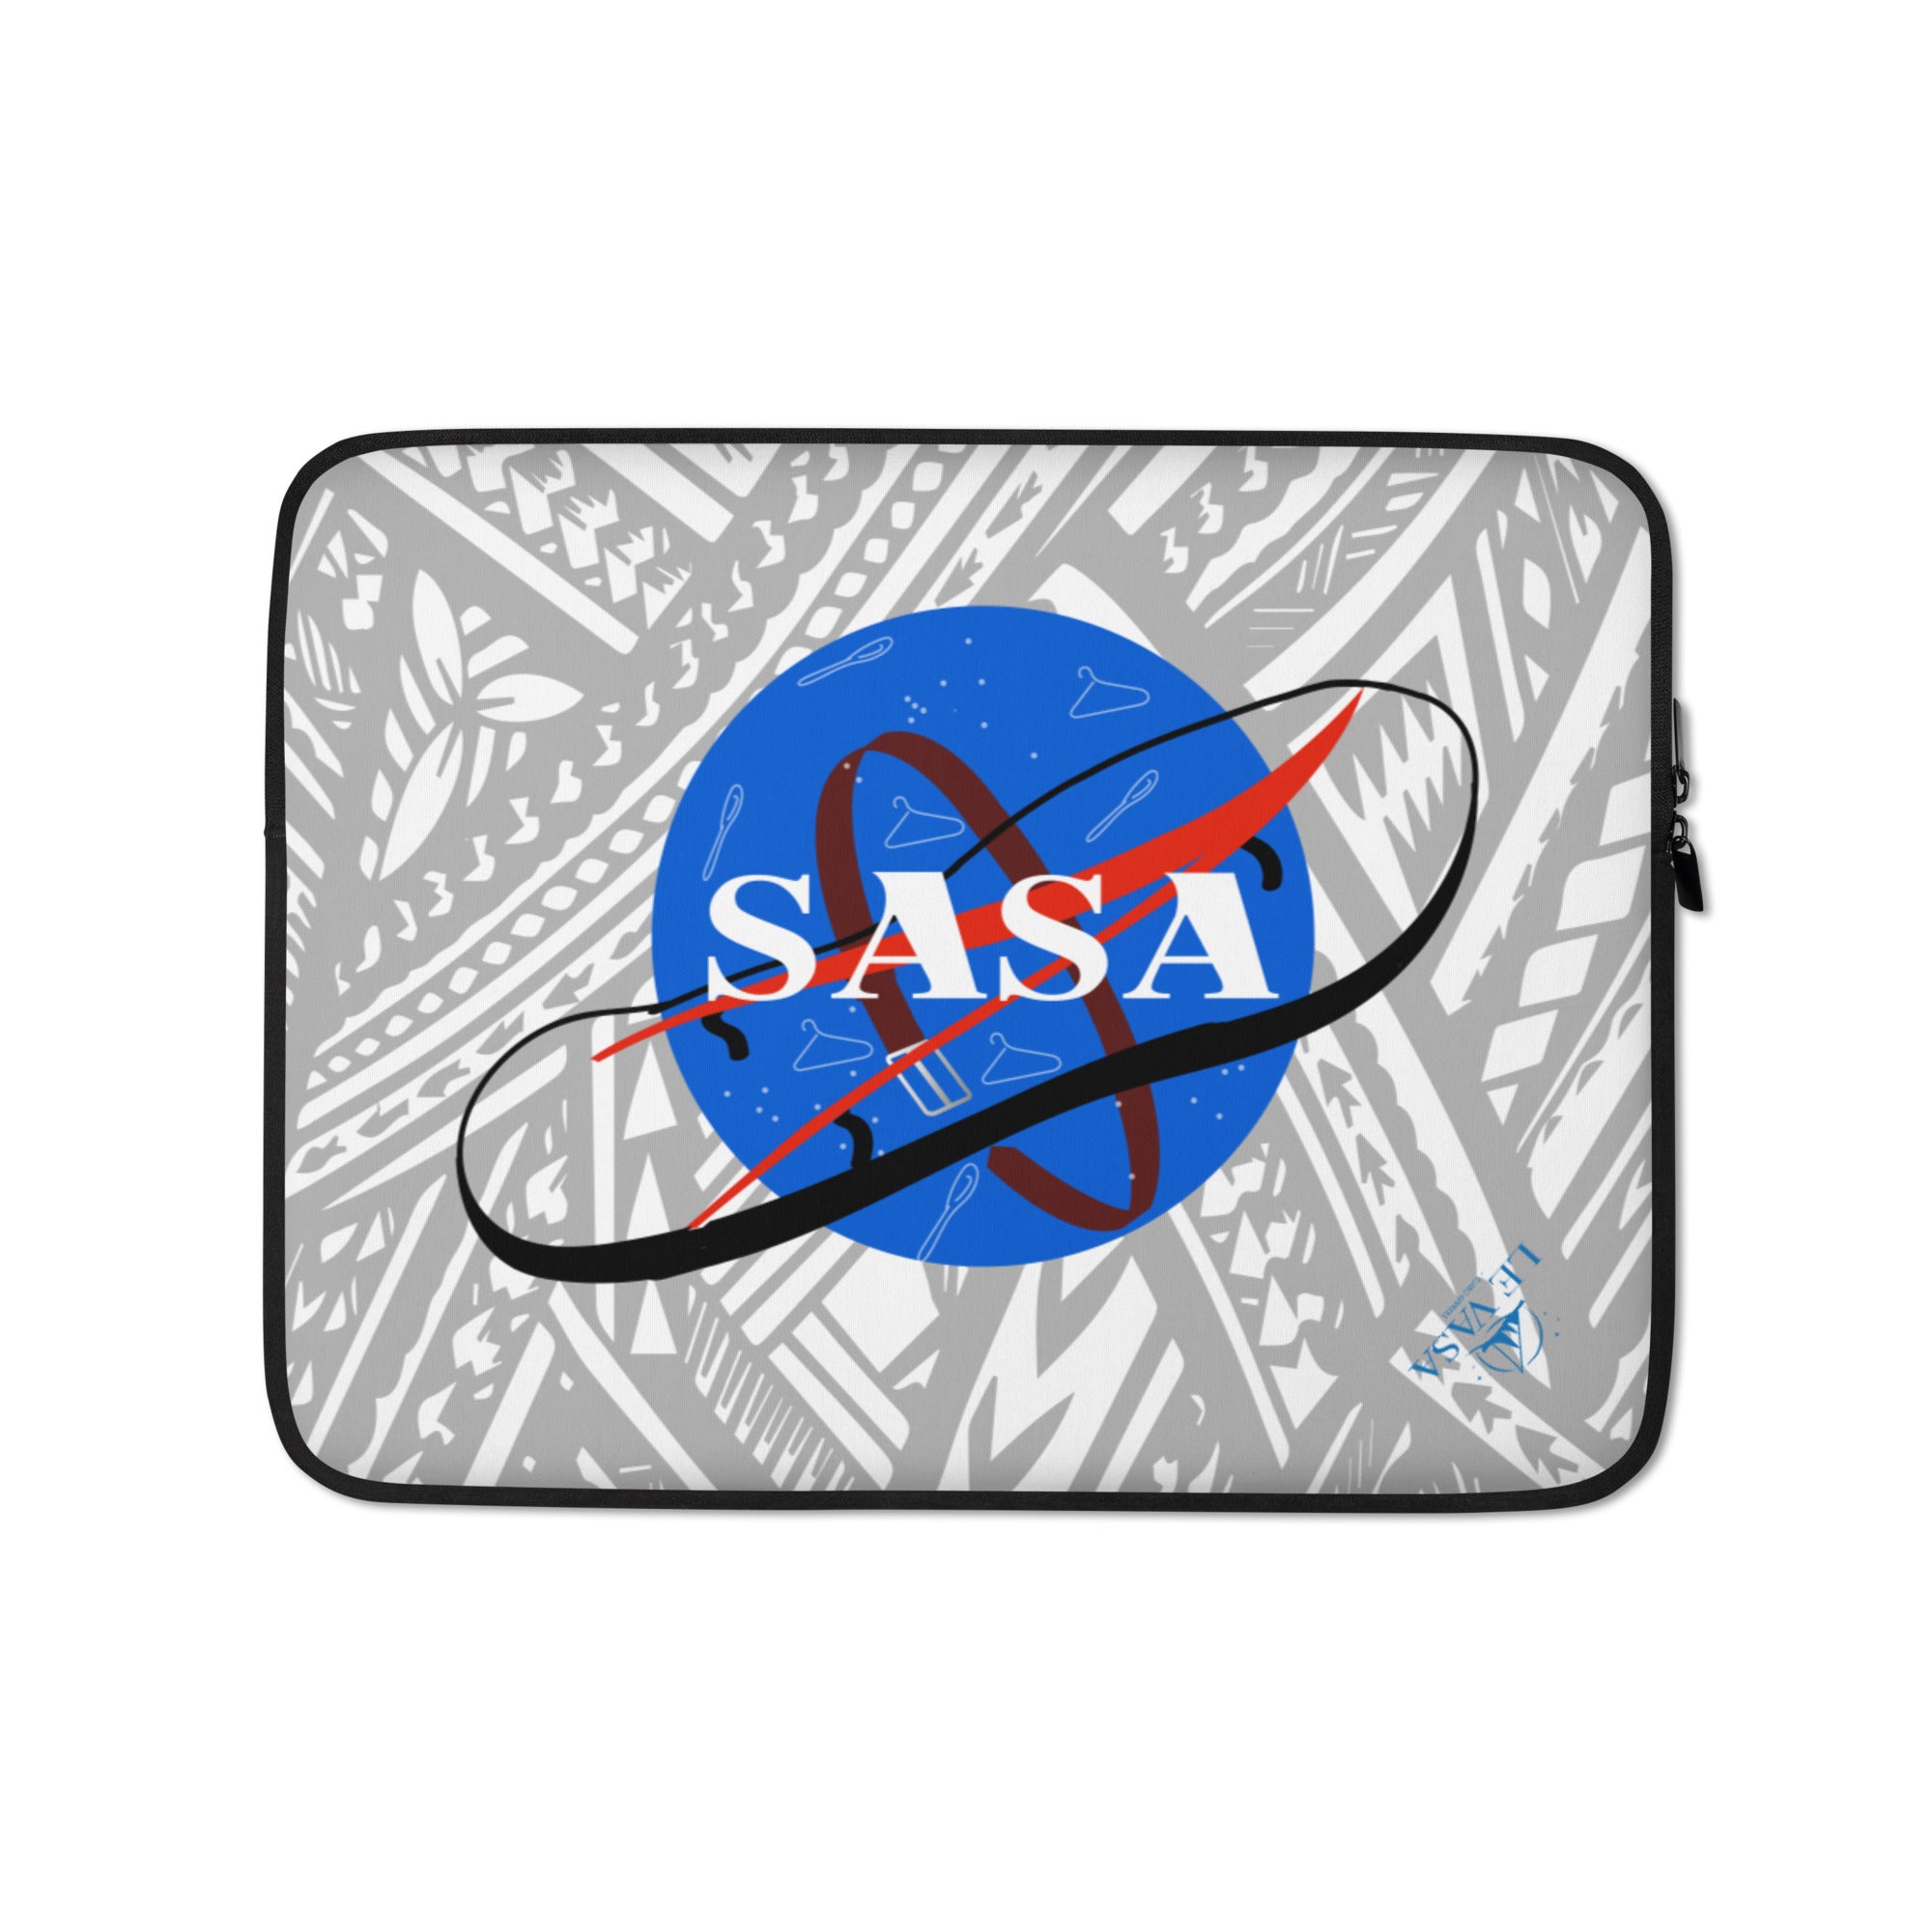 SASA ISSA SLAP (laptop case)